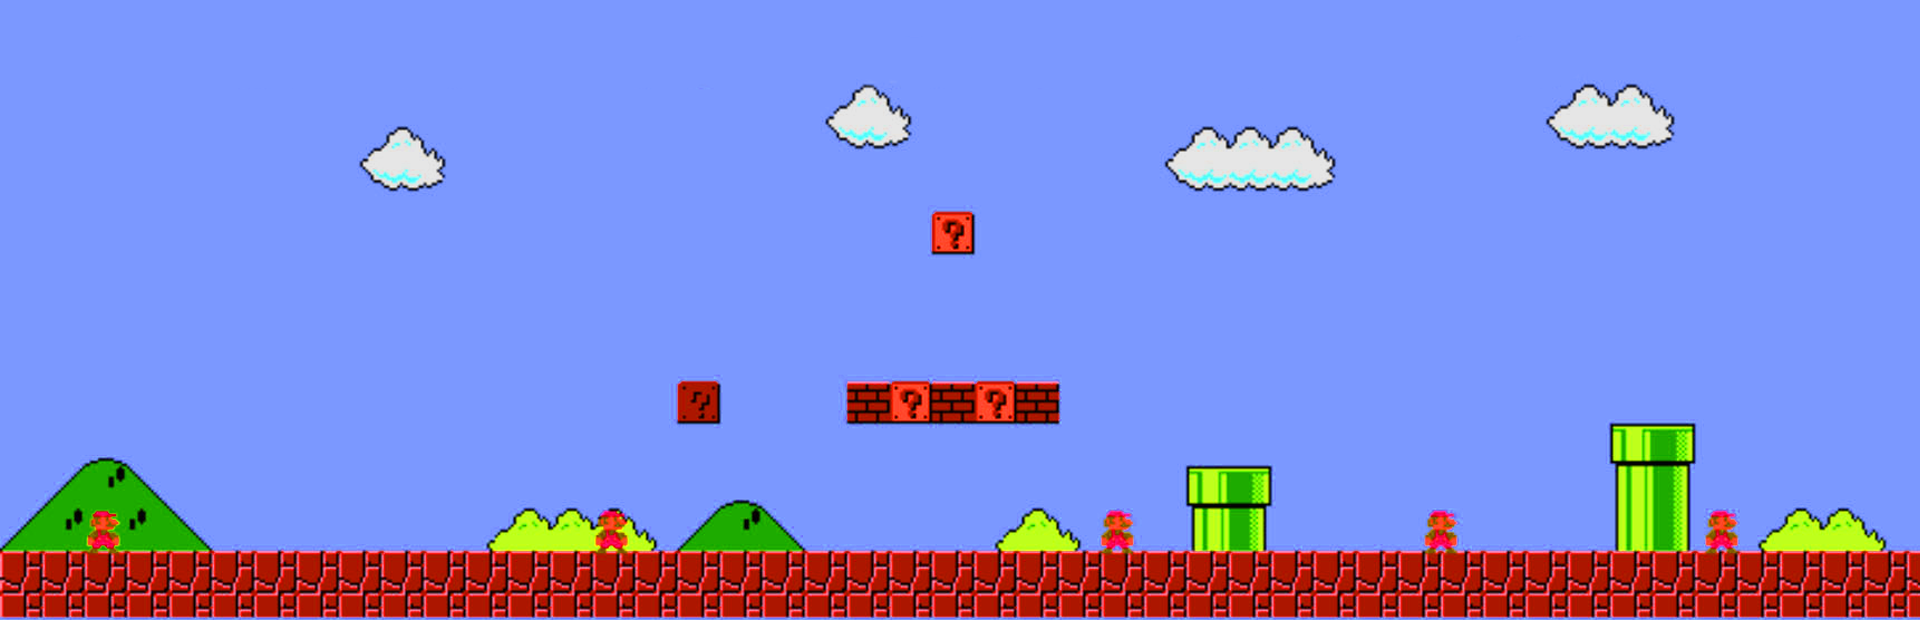 Project S.M.B.(Super Mario Bros True Pc Port) by Delta Works - Game Jolt